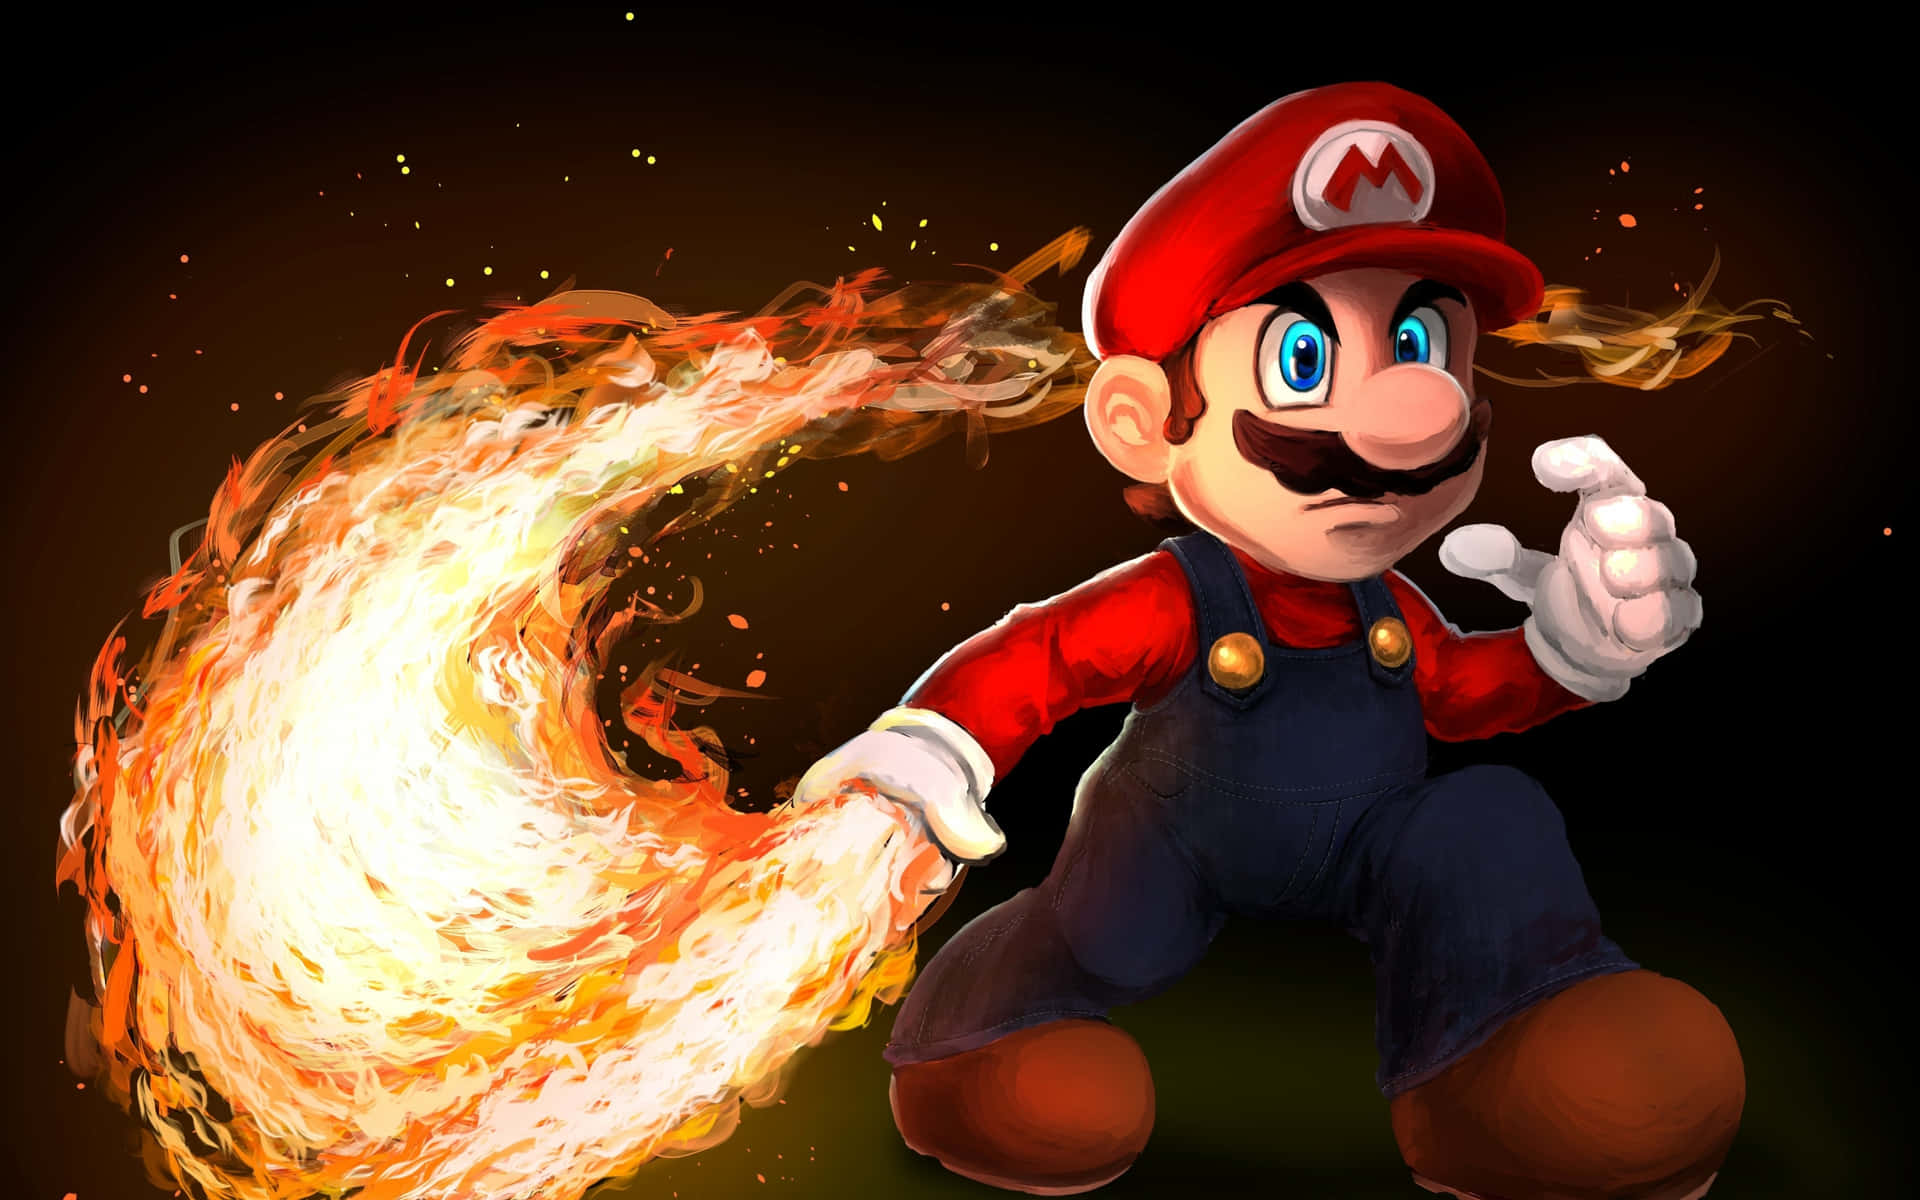 "Explore the Mushroom Kingdom in Super Mario 3D!" Wallpaper